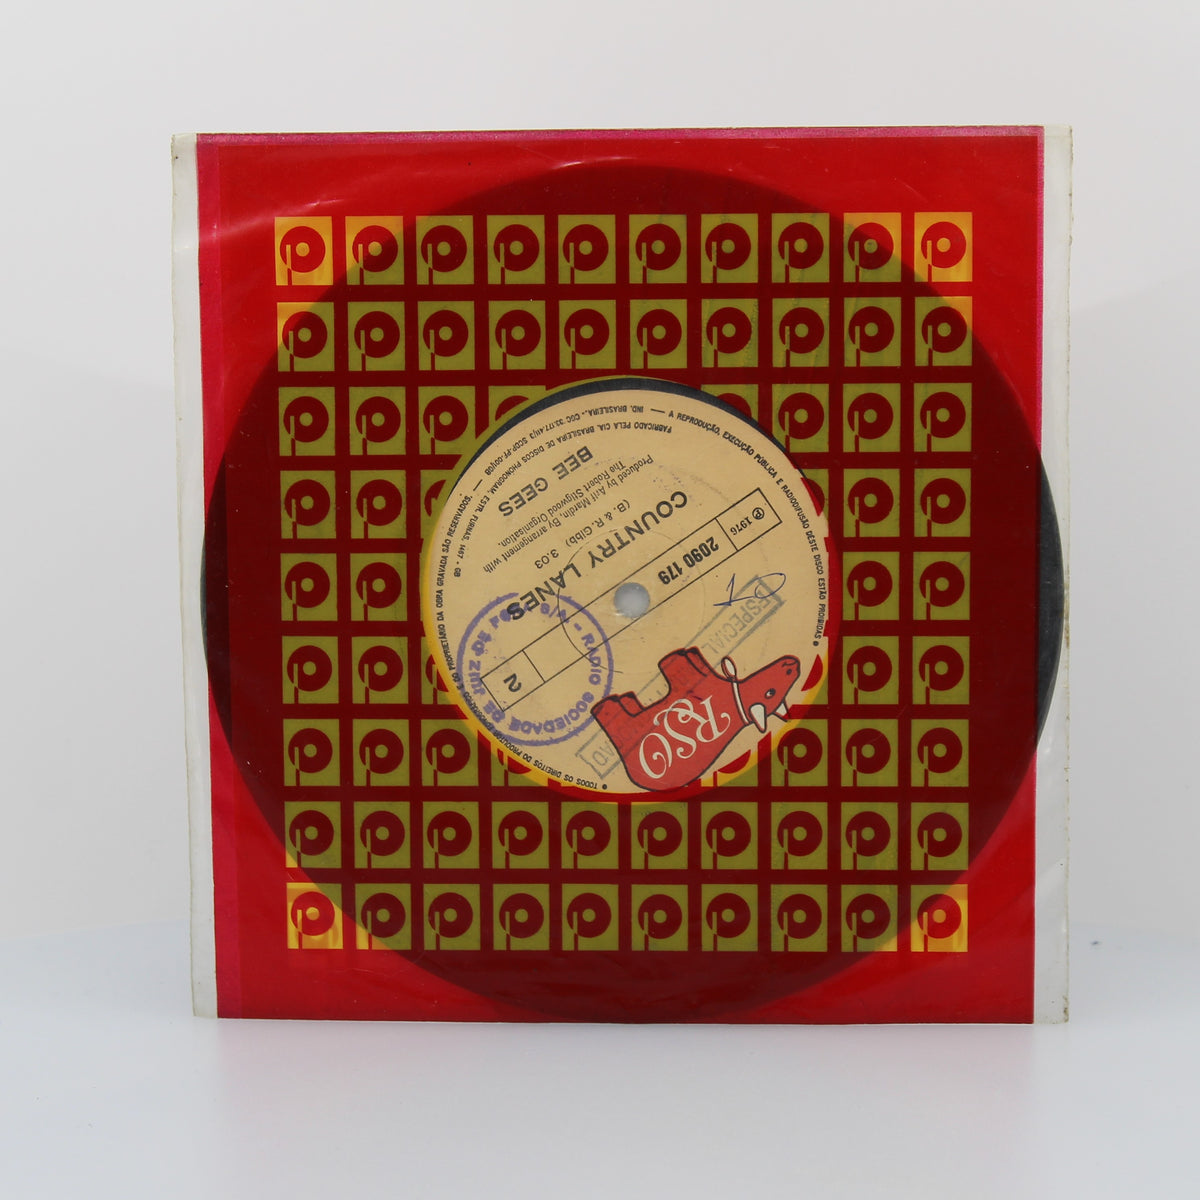 Bee Gees - Fanny, Vinyl 7&quot; Single 45Rpm, Brazil 1976